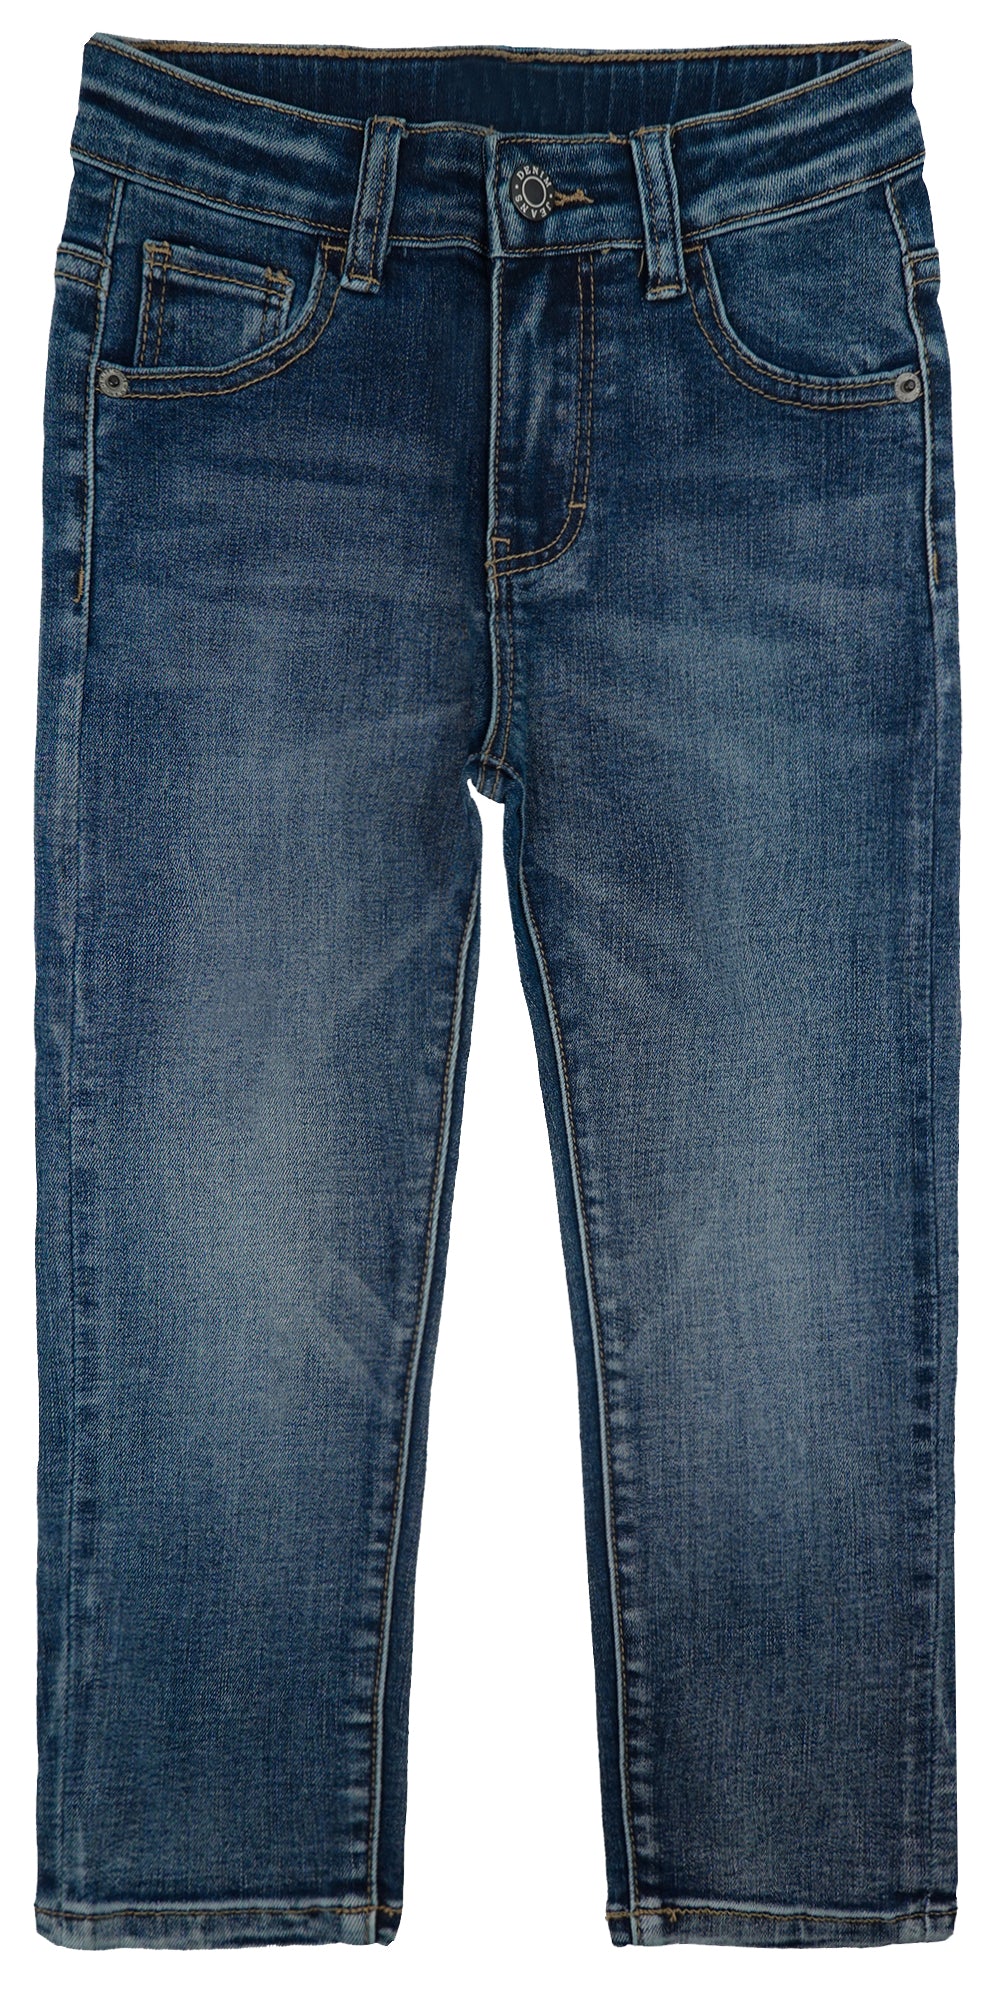 Boys Jeans Little Big Elastic Band Inside Simple Desgin Stretchy Denim Pants